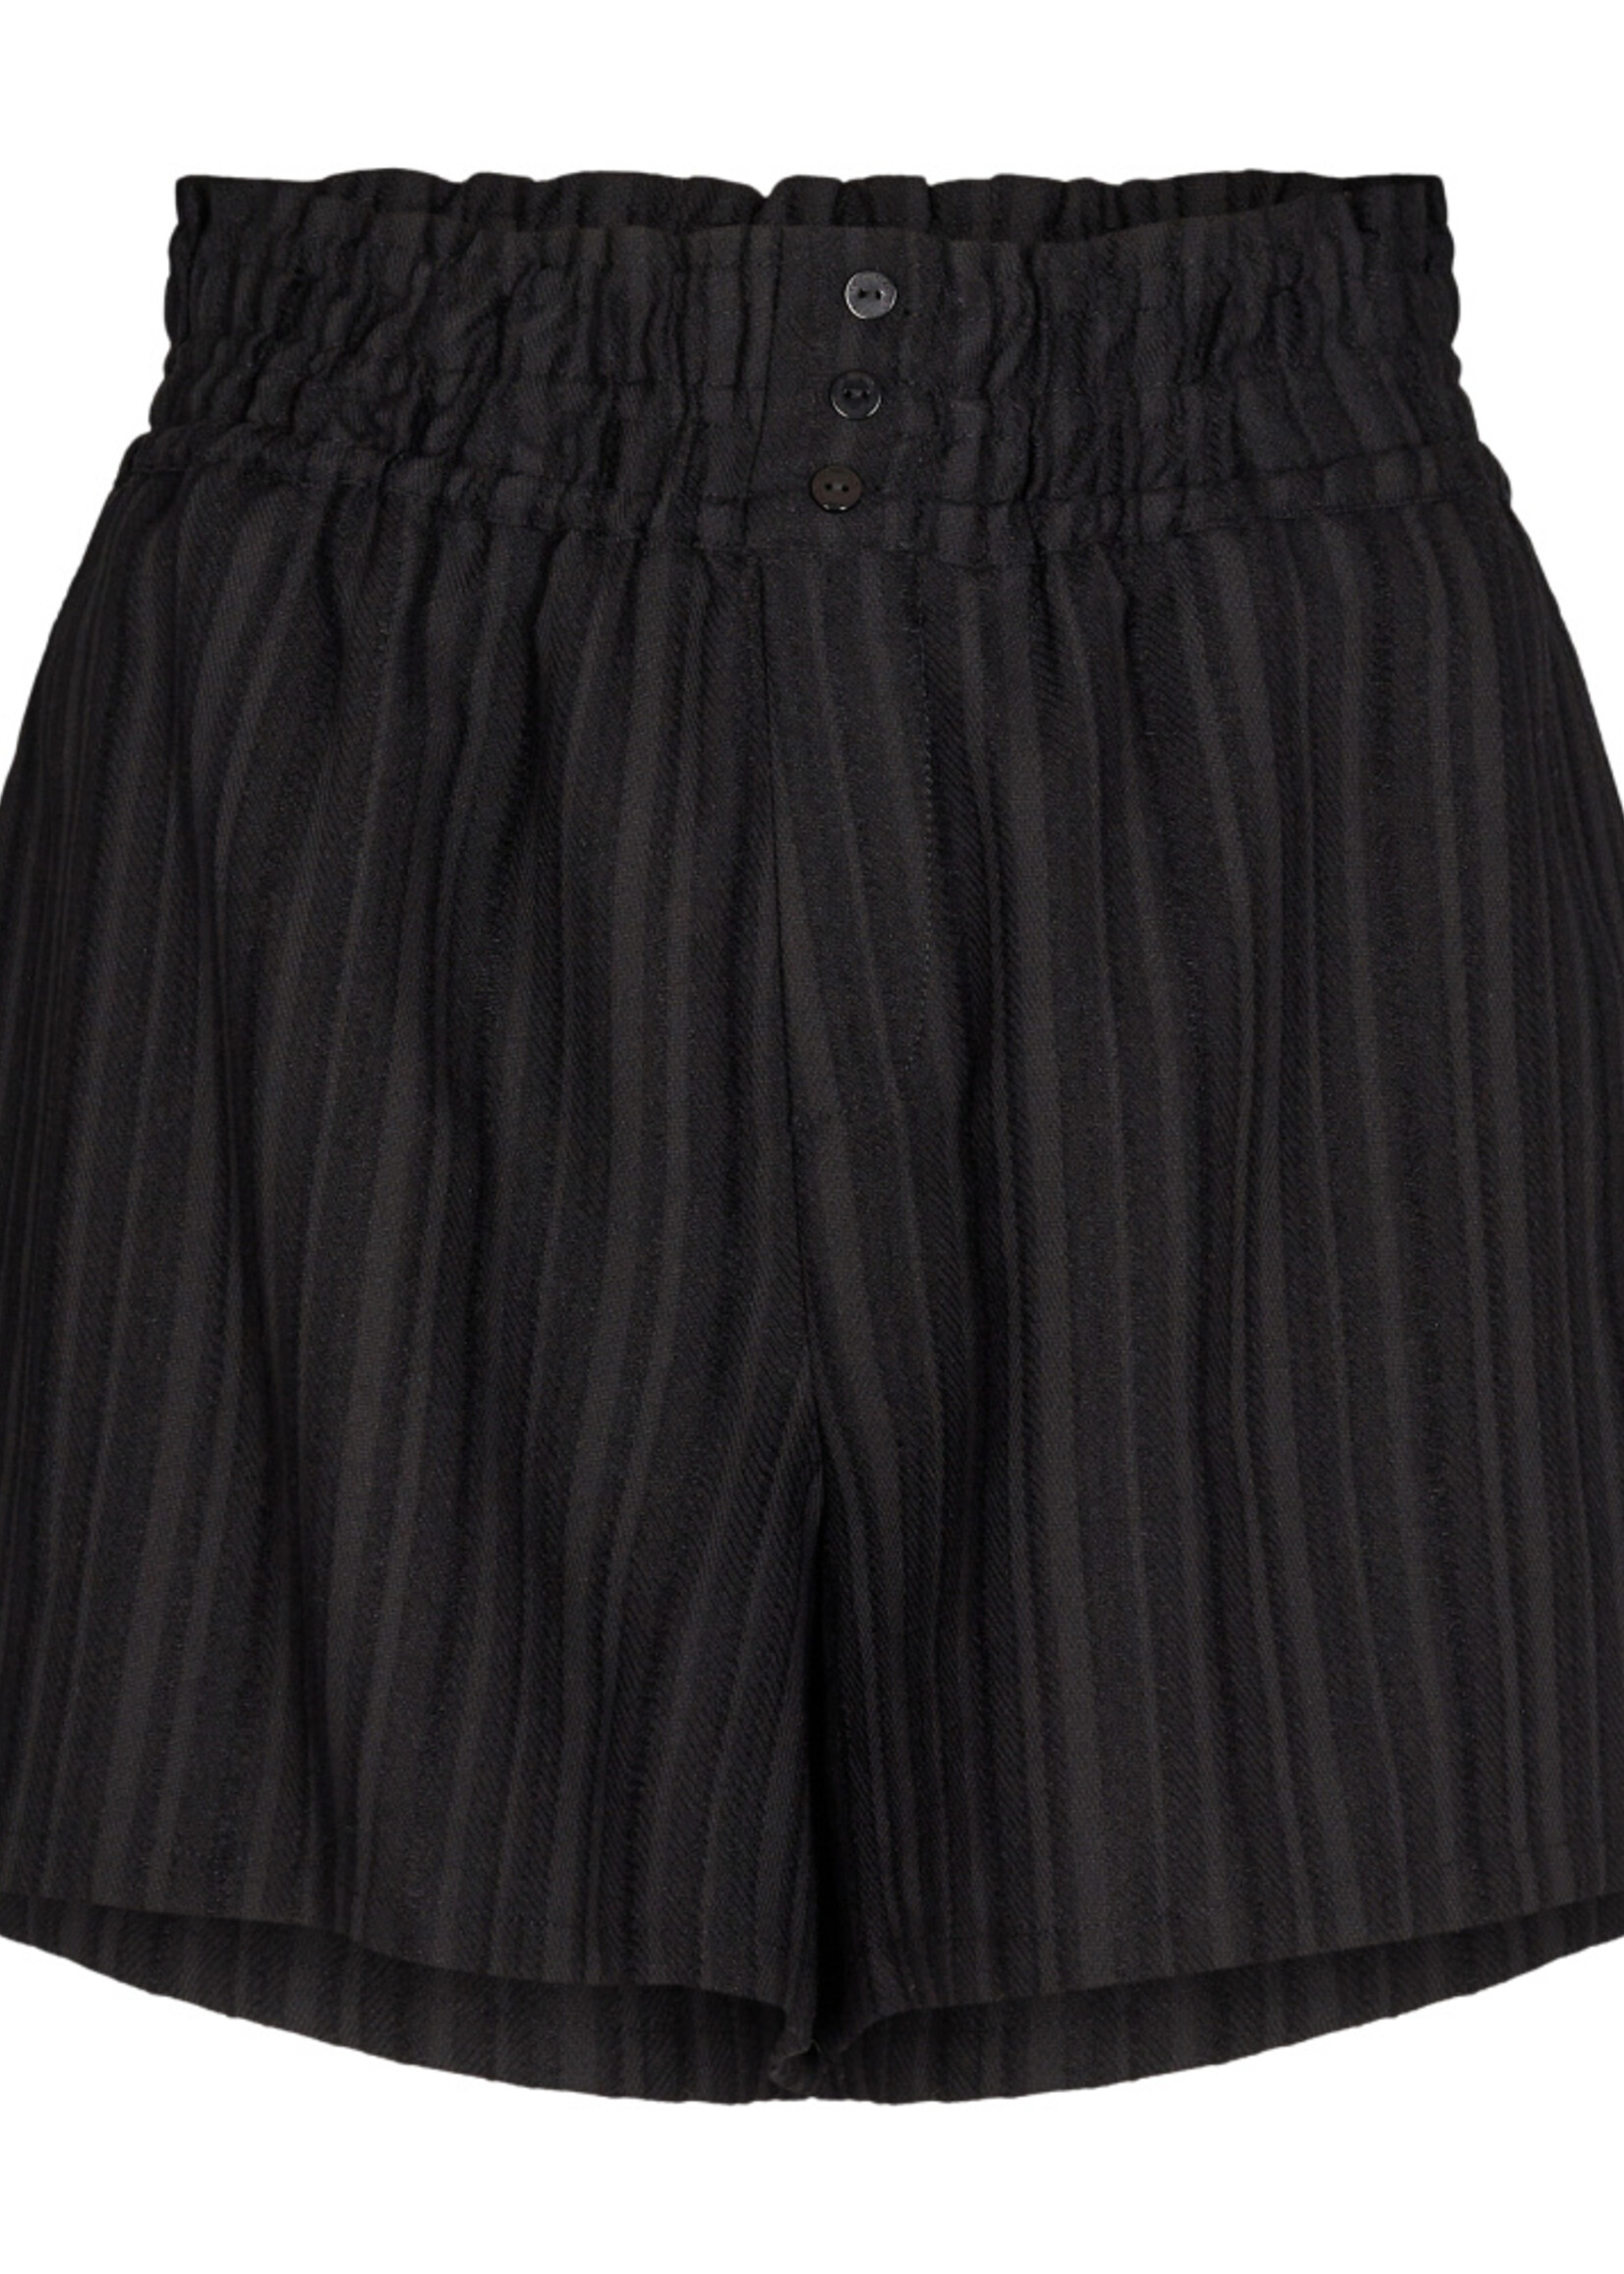 Co'Couture Enya Shorts - Black